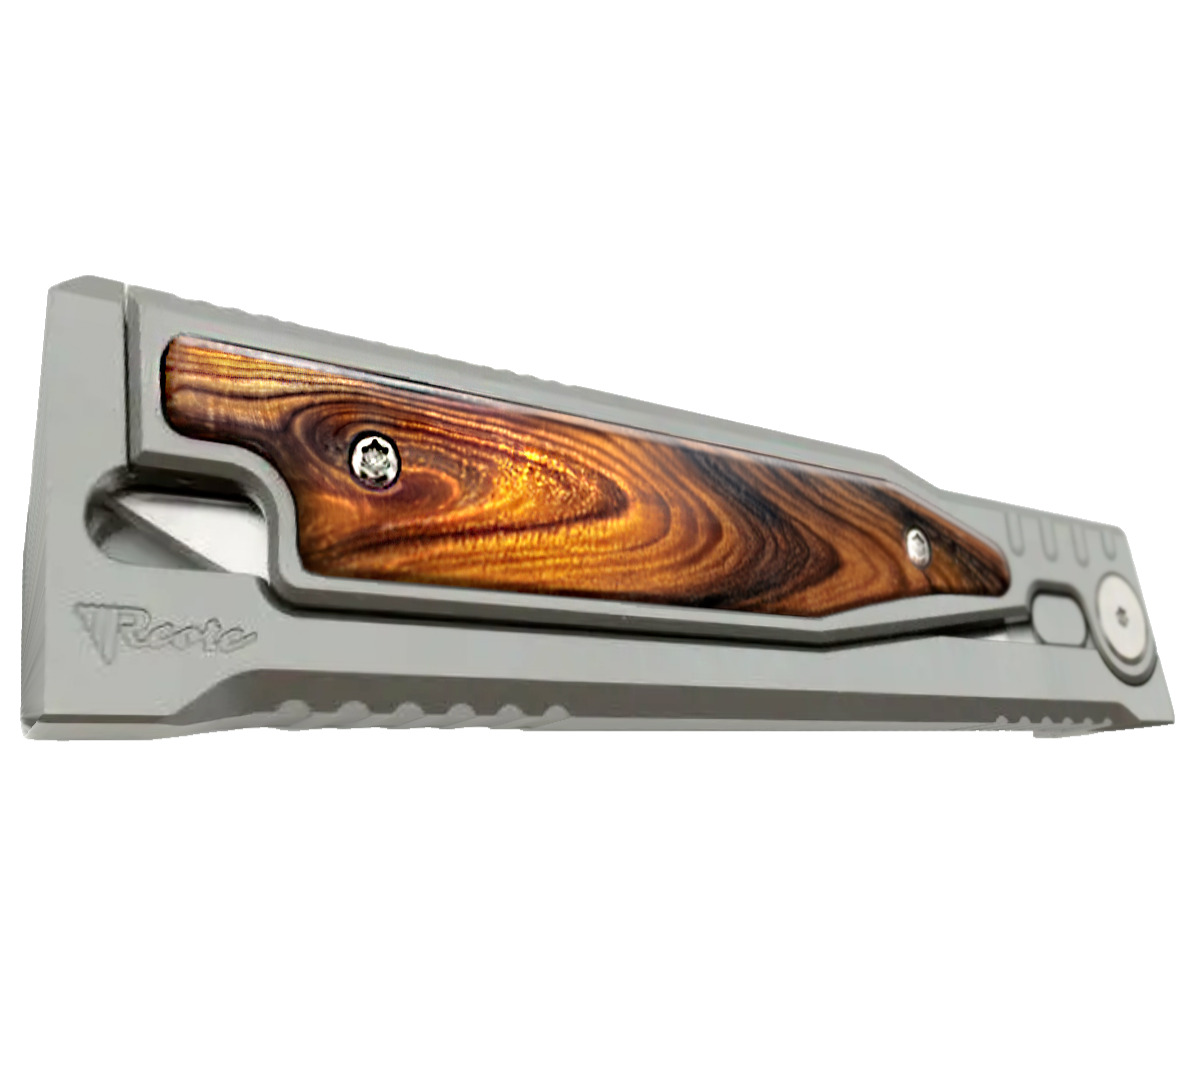 Customized Desert Ironwood Scales for REATE XO Knife